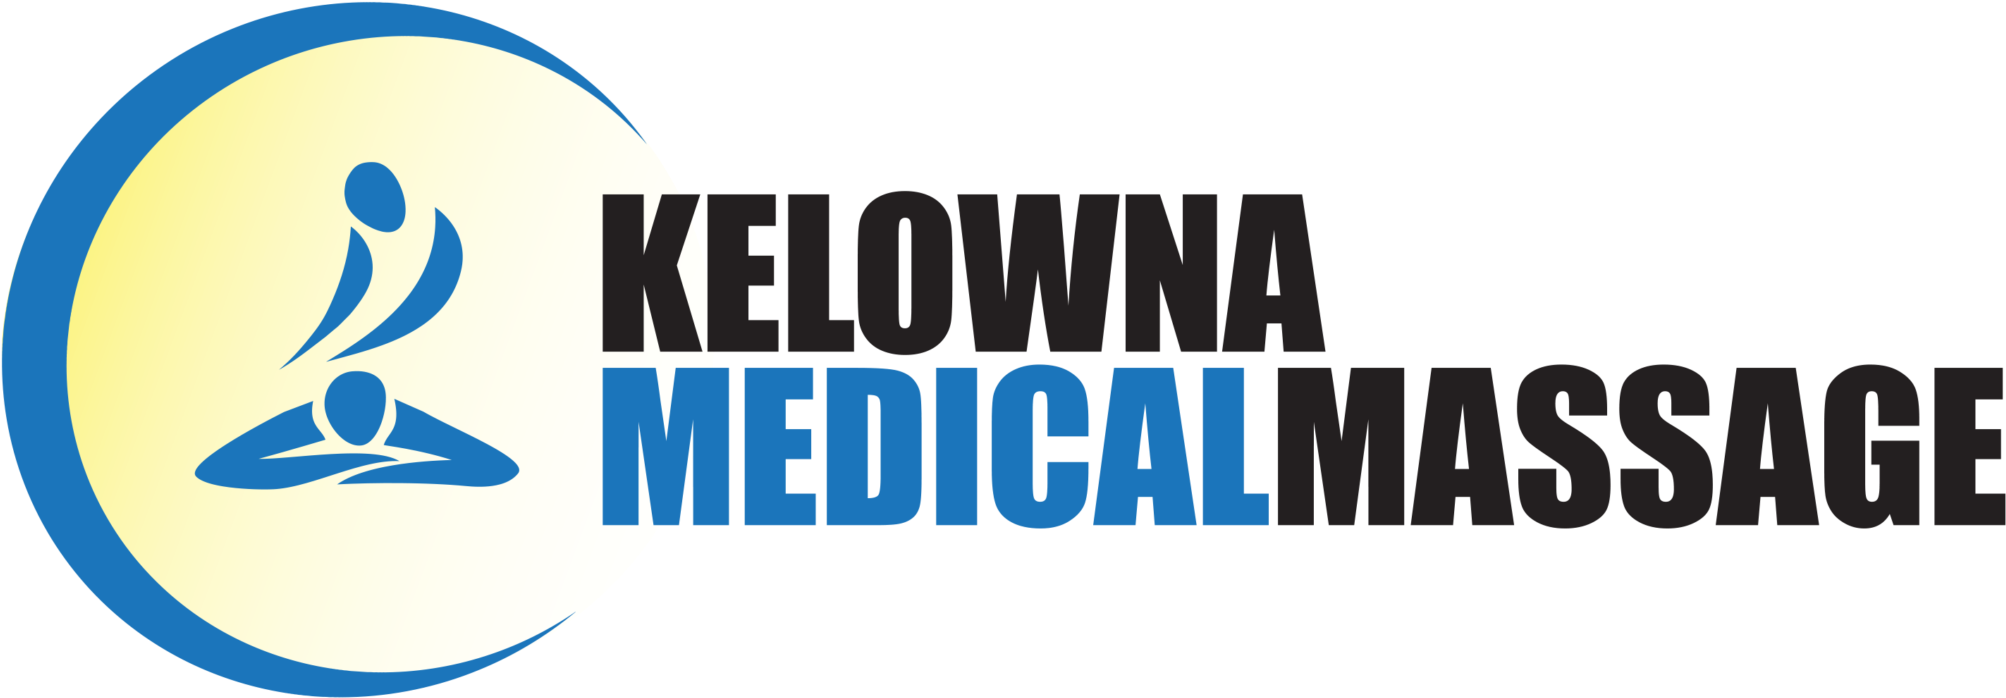 Kelowna Medical Massage - Career Clipart (2048x740), Png Download